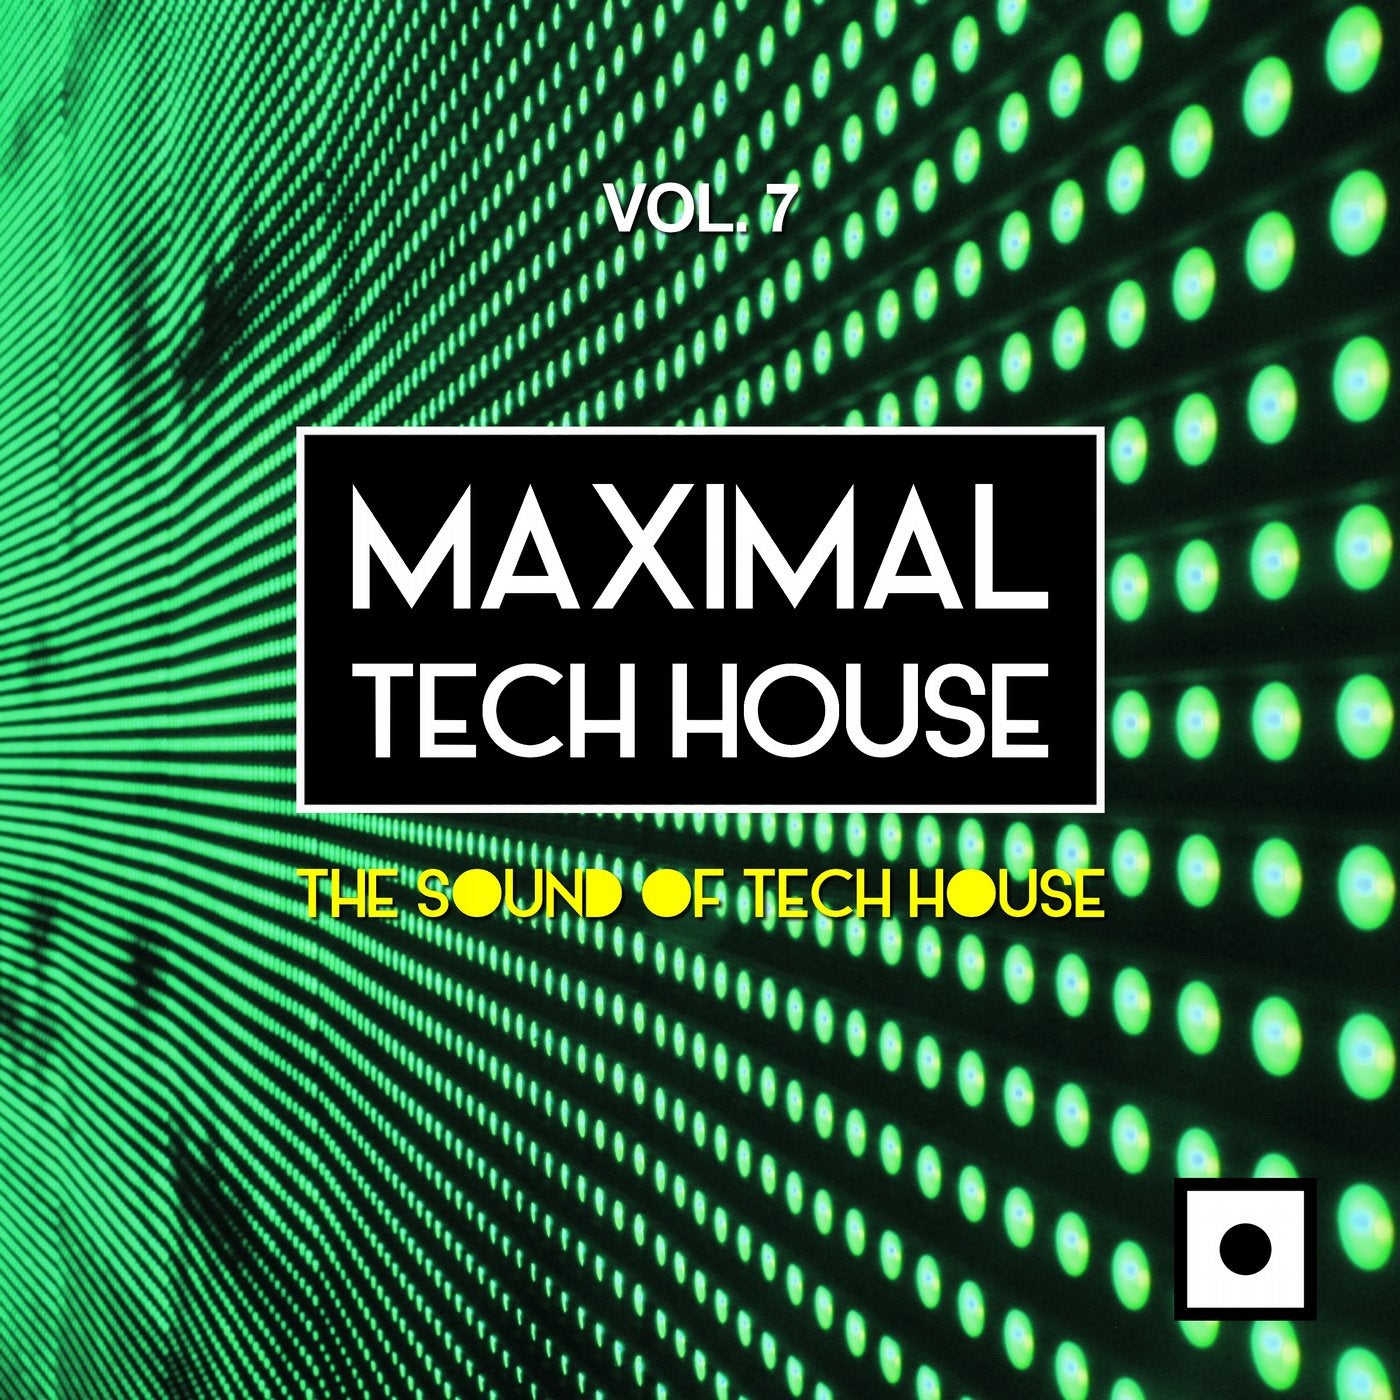 Maximal Tech House, Vol. 7 (The Sound Of Tech House)